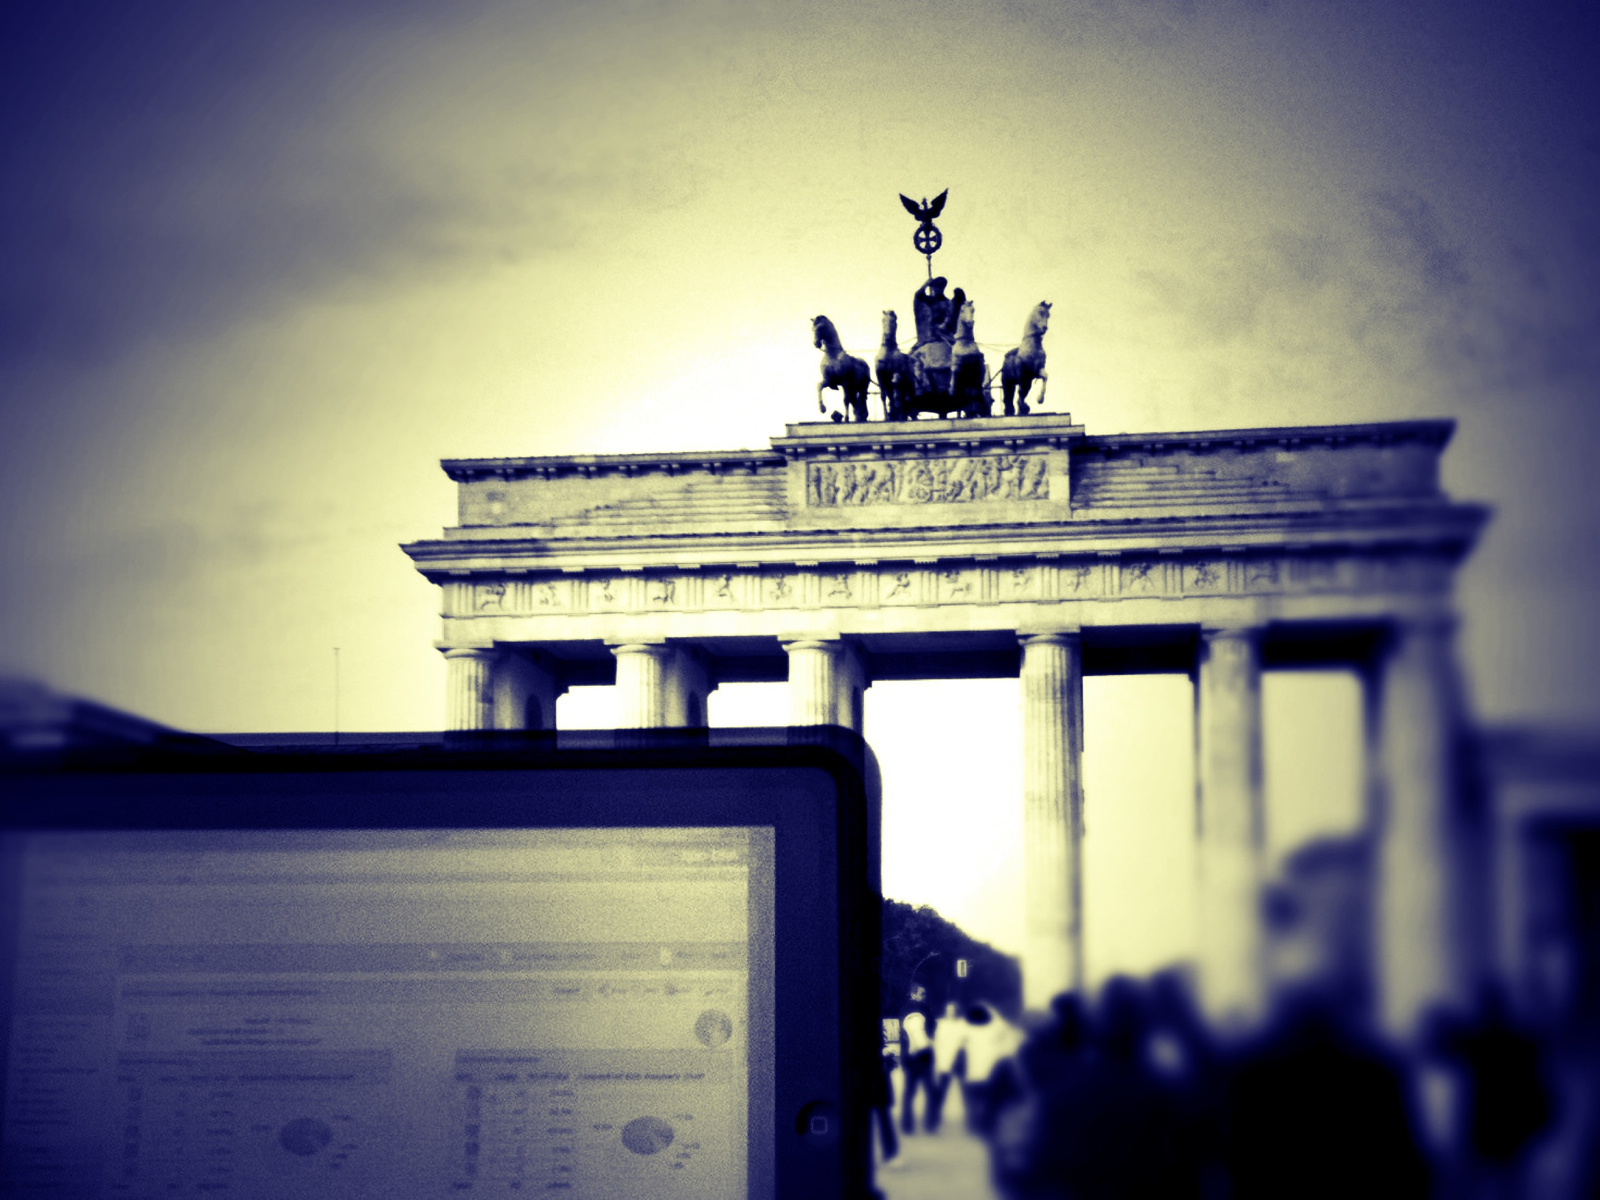 Day 36 – AppTitude at the Brandenburg Gate